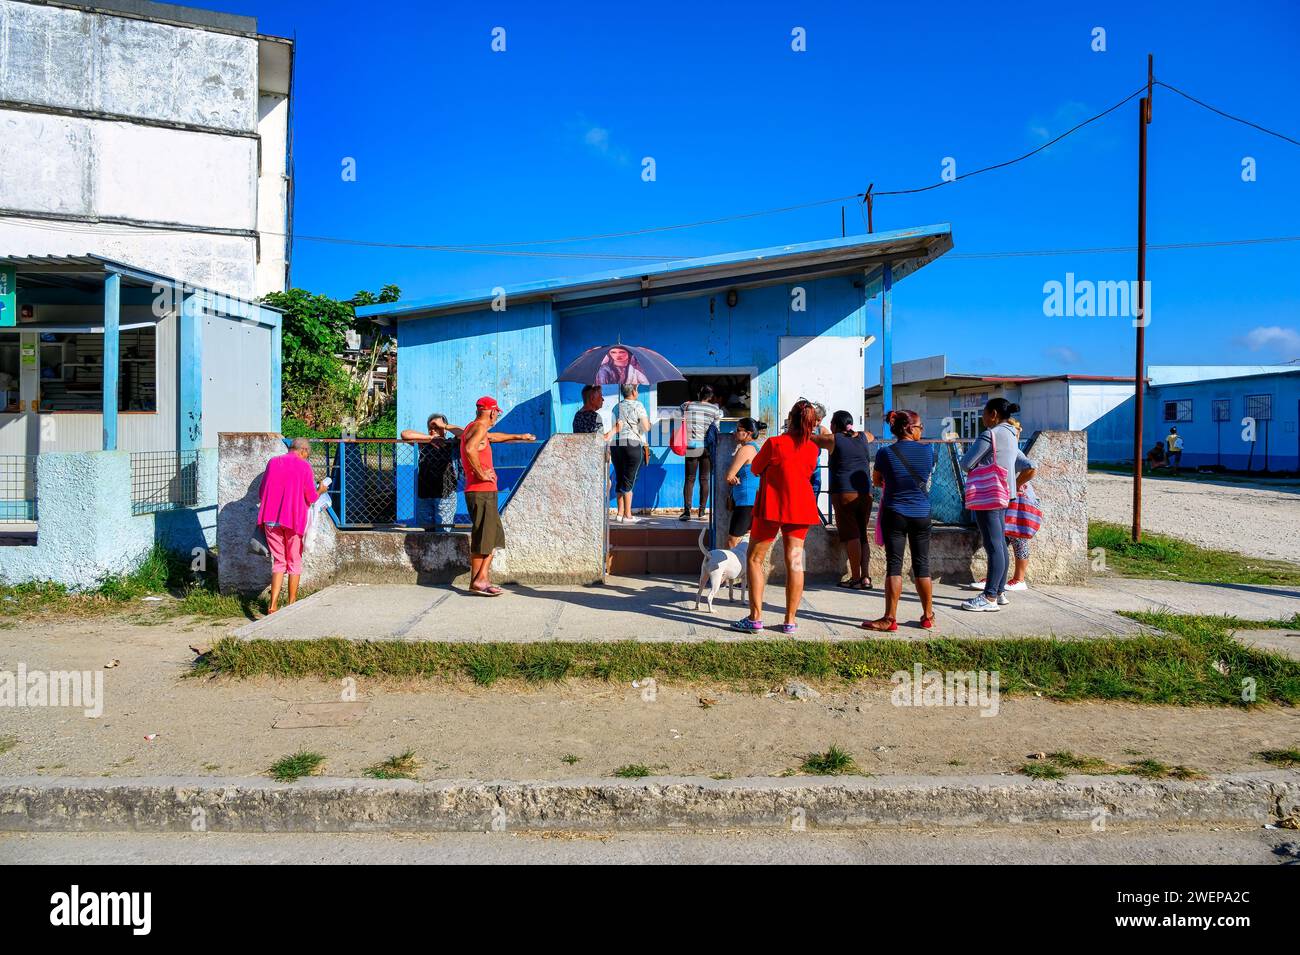 Cuban people lining up or waiting in line, santa clara, cuba Stock Photo